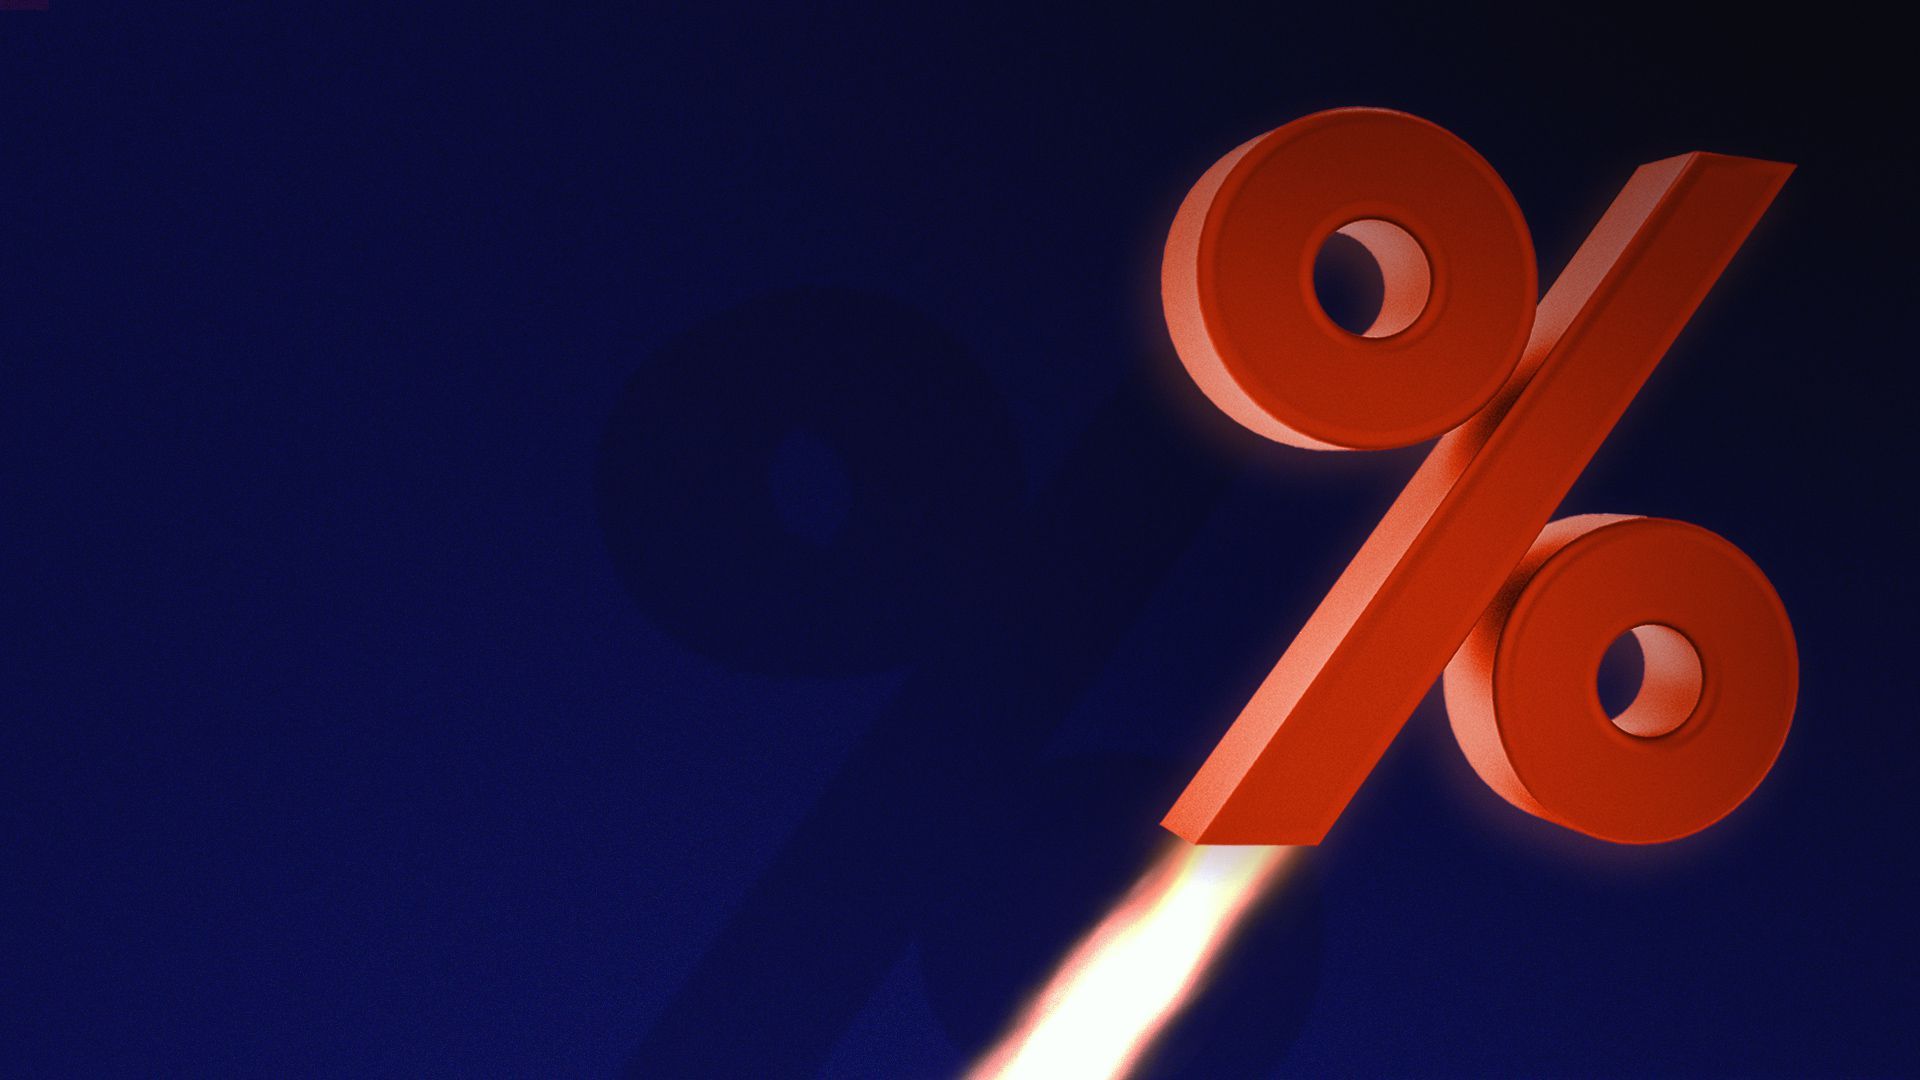 Illustration of a percent sign shooting upwards like a rocket.